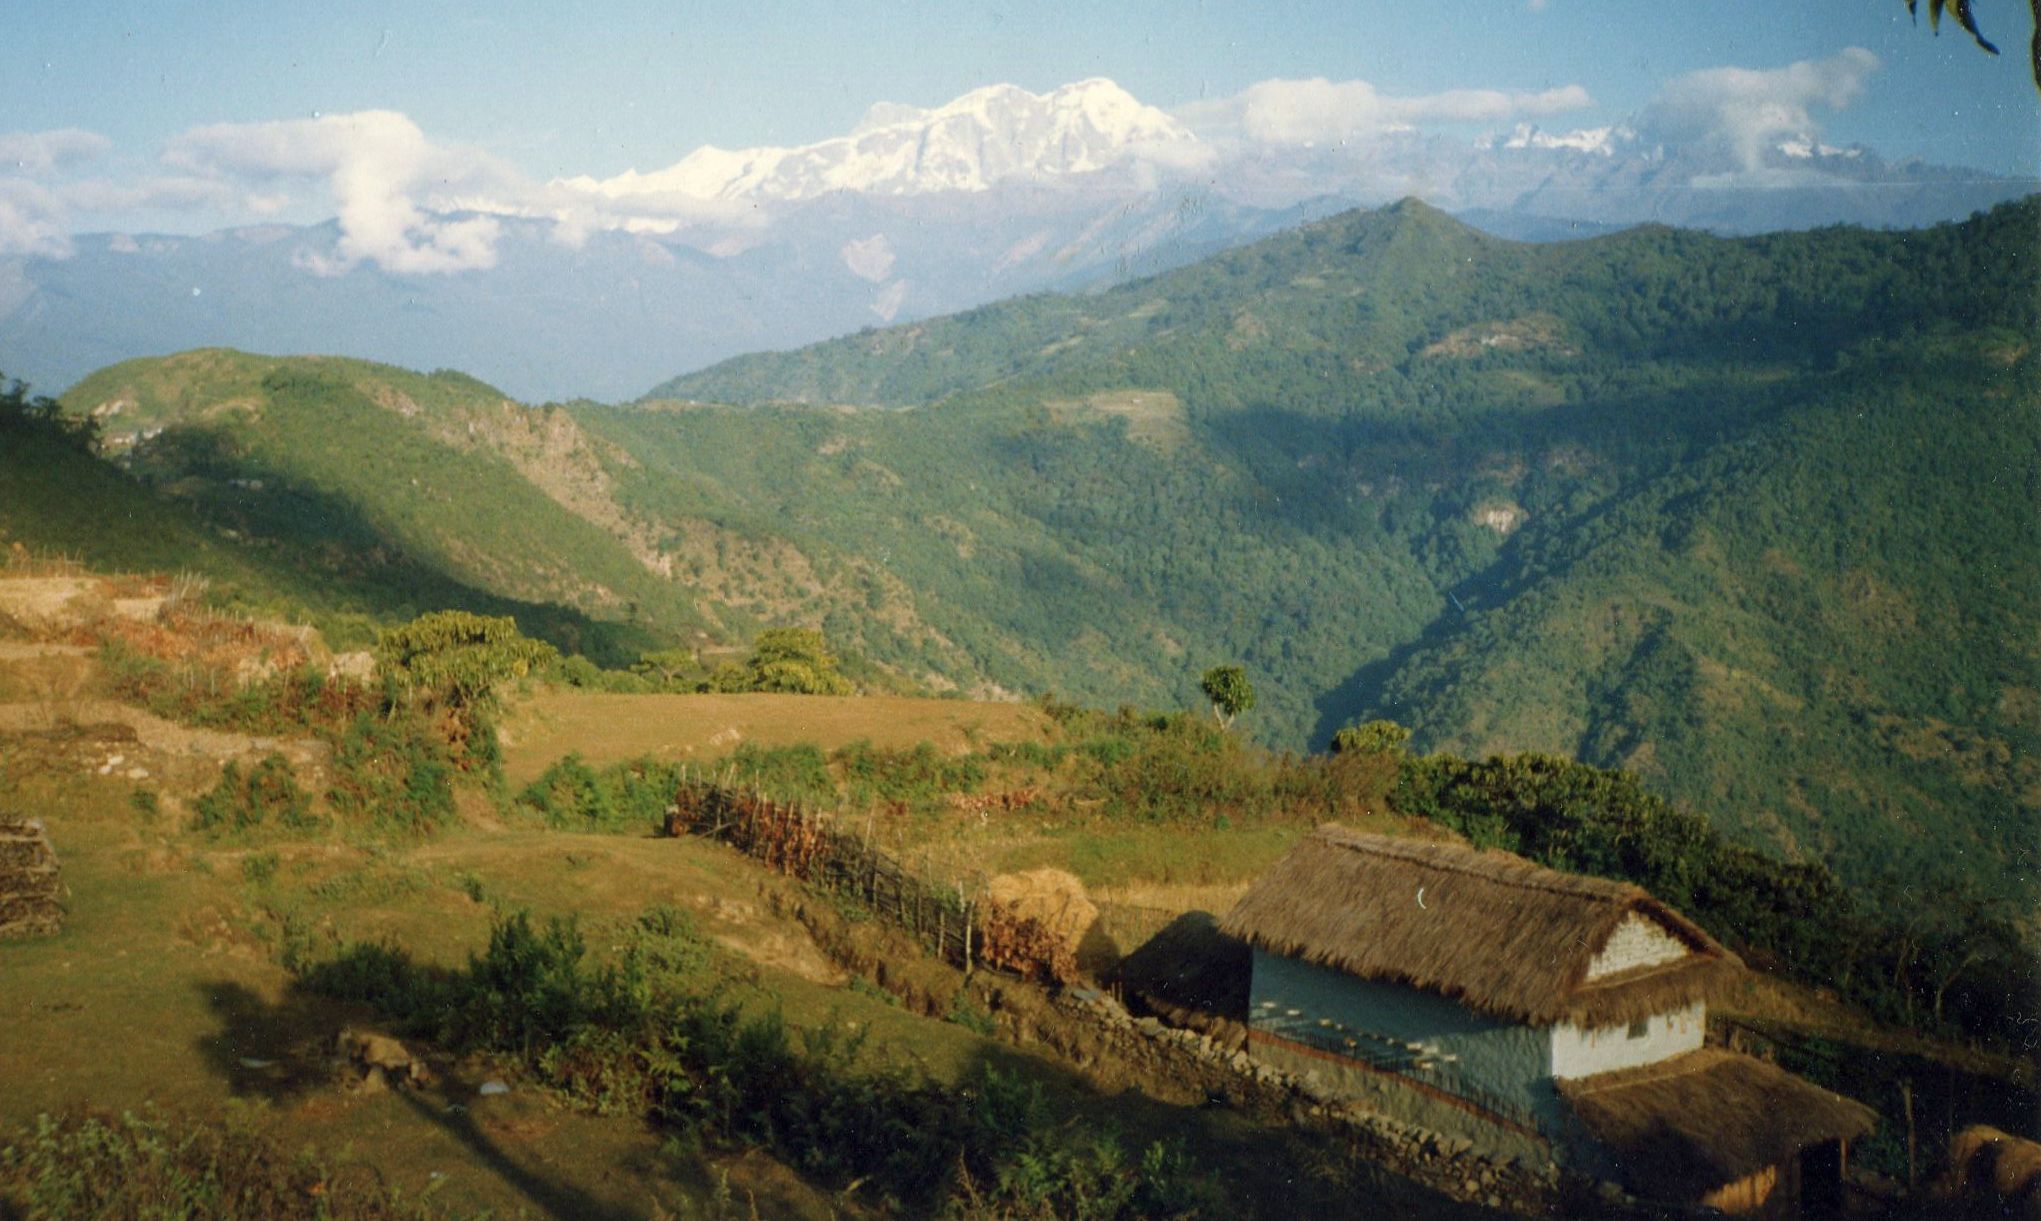 Photographs of the Marsayangdi Valley and the Manaslu Himal